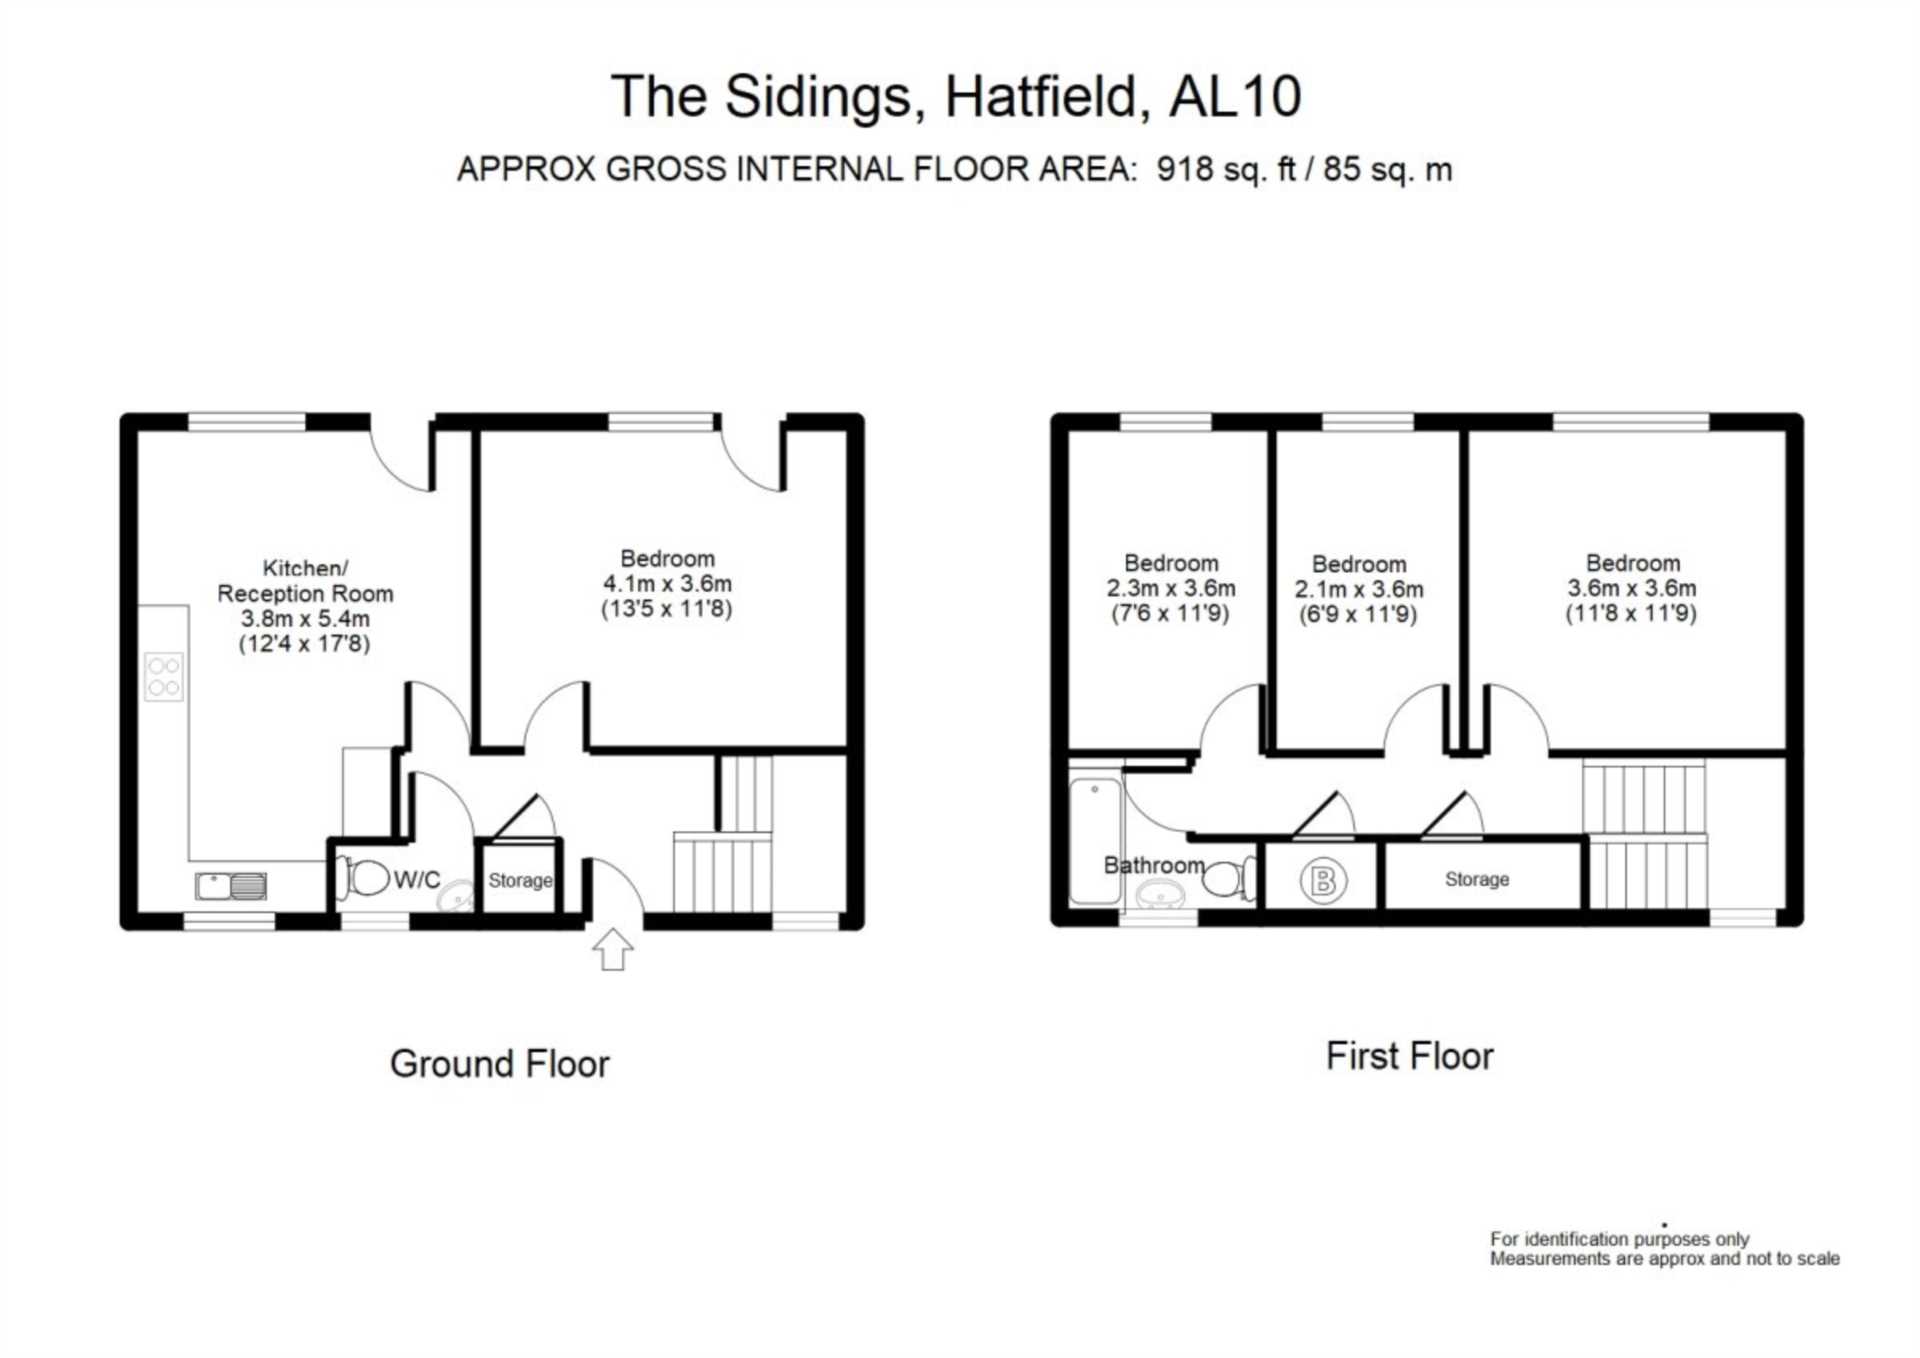 The Sidings, Hatfield, Image 15